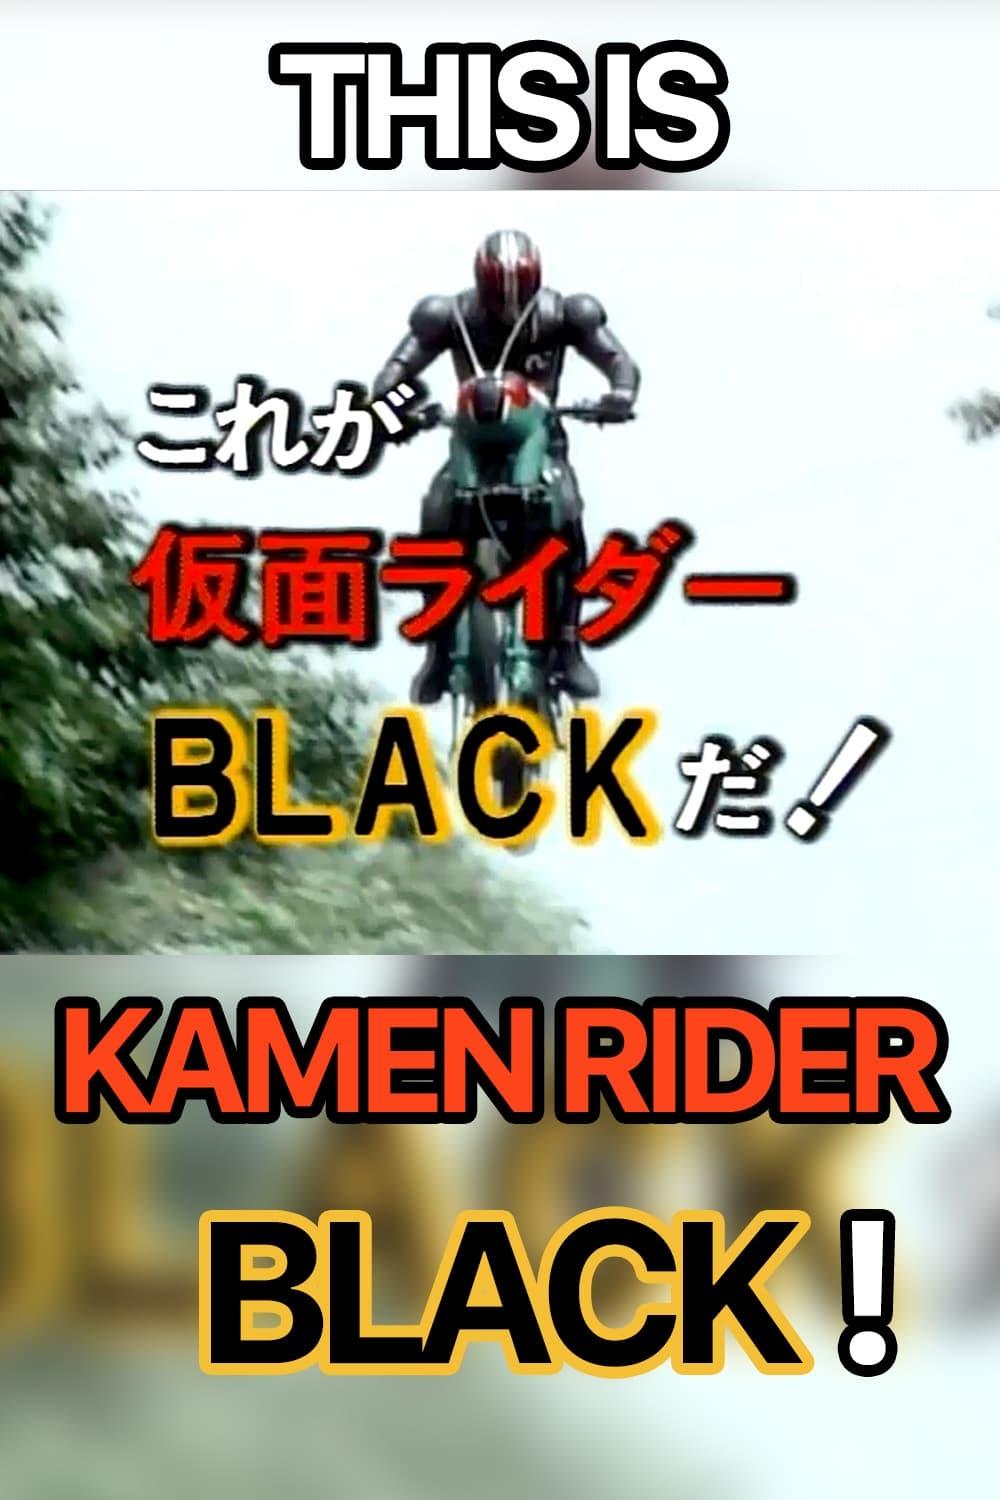 This is Kamen Rider Black! poster